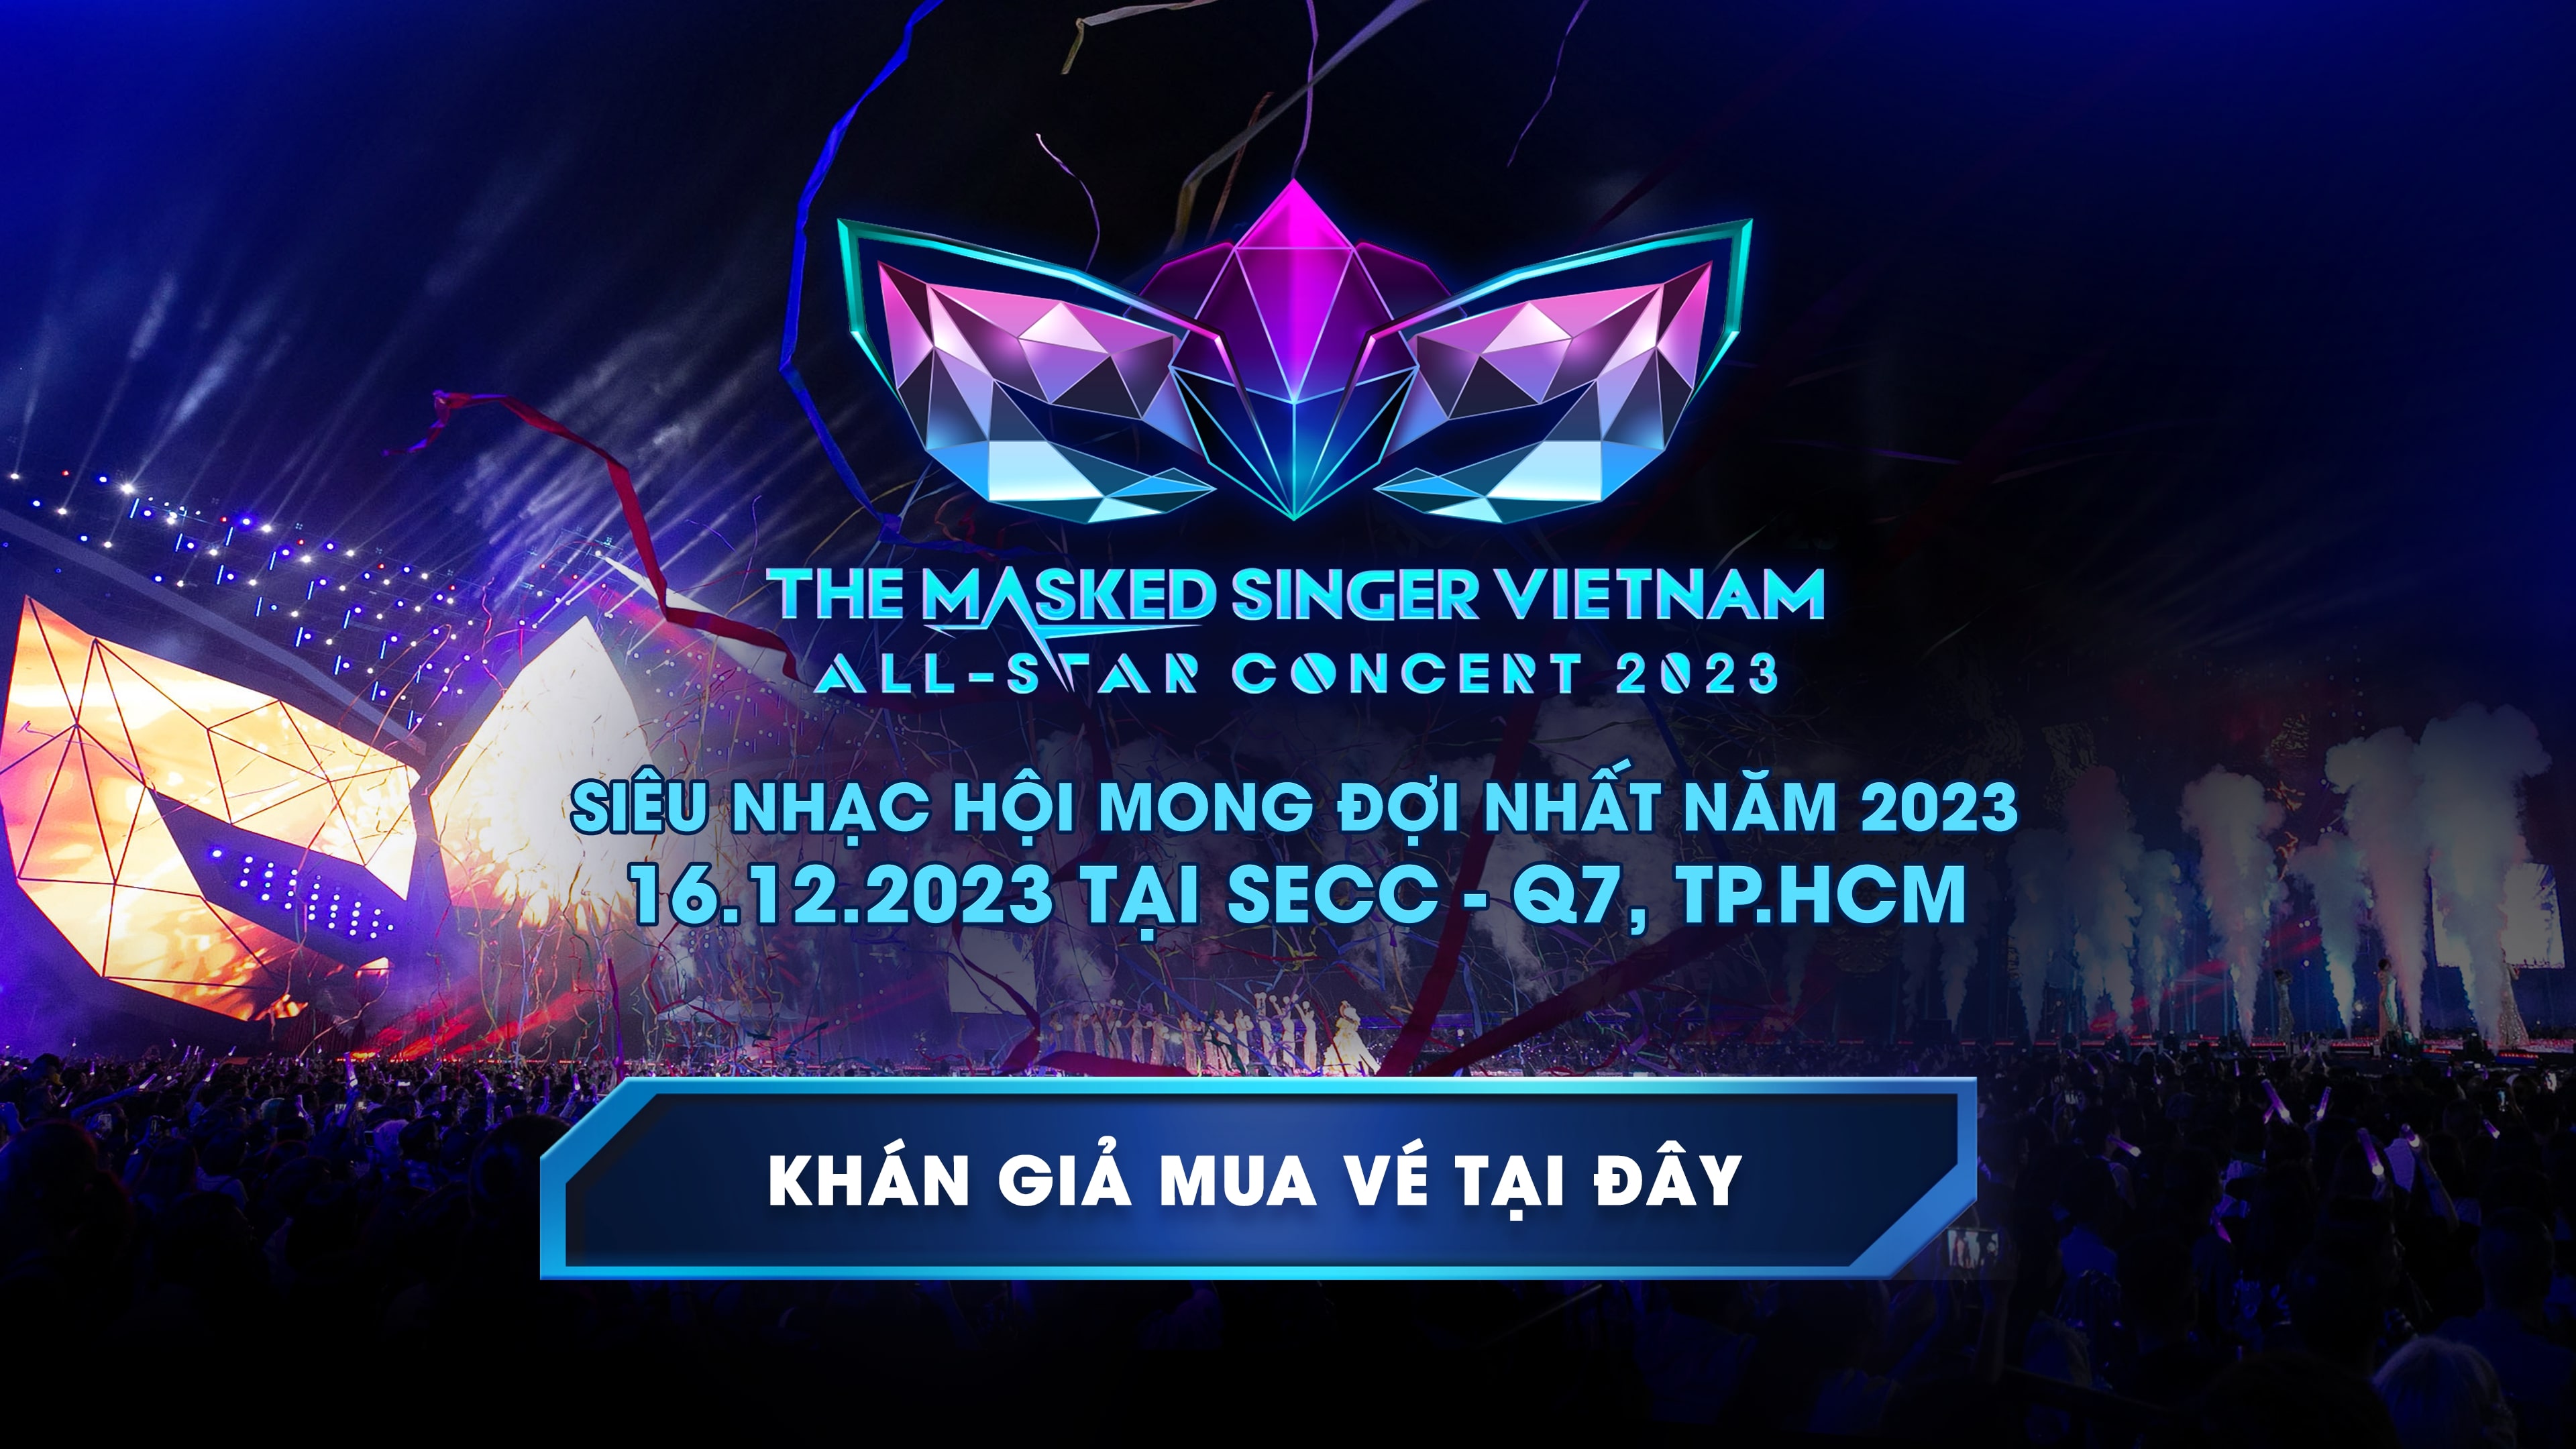 The Masked Singer Vietnam ALLSTAR CONCERT 2022